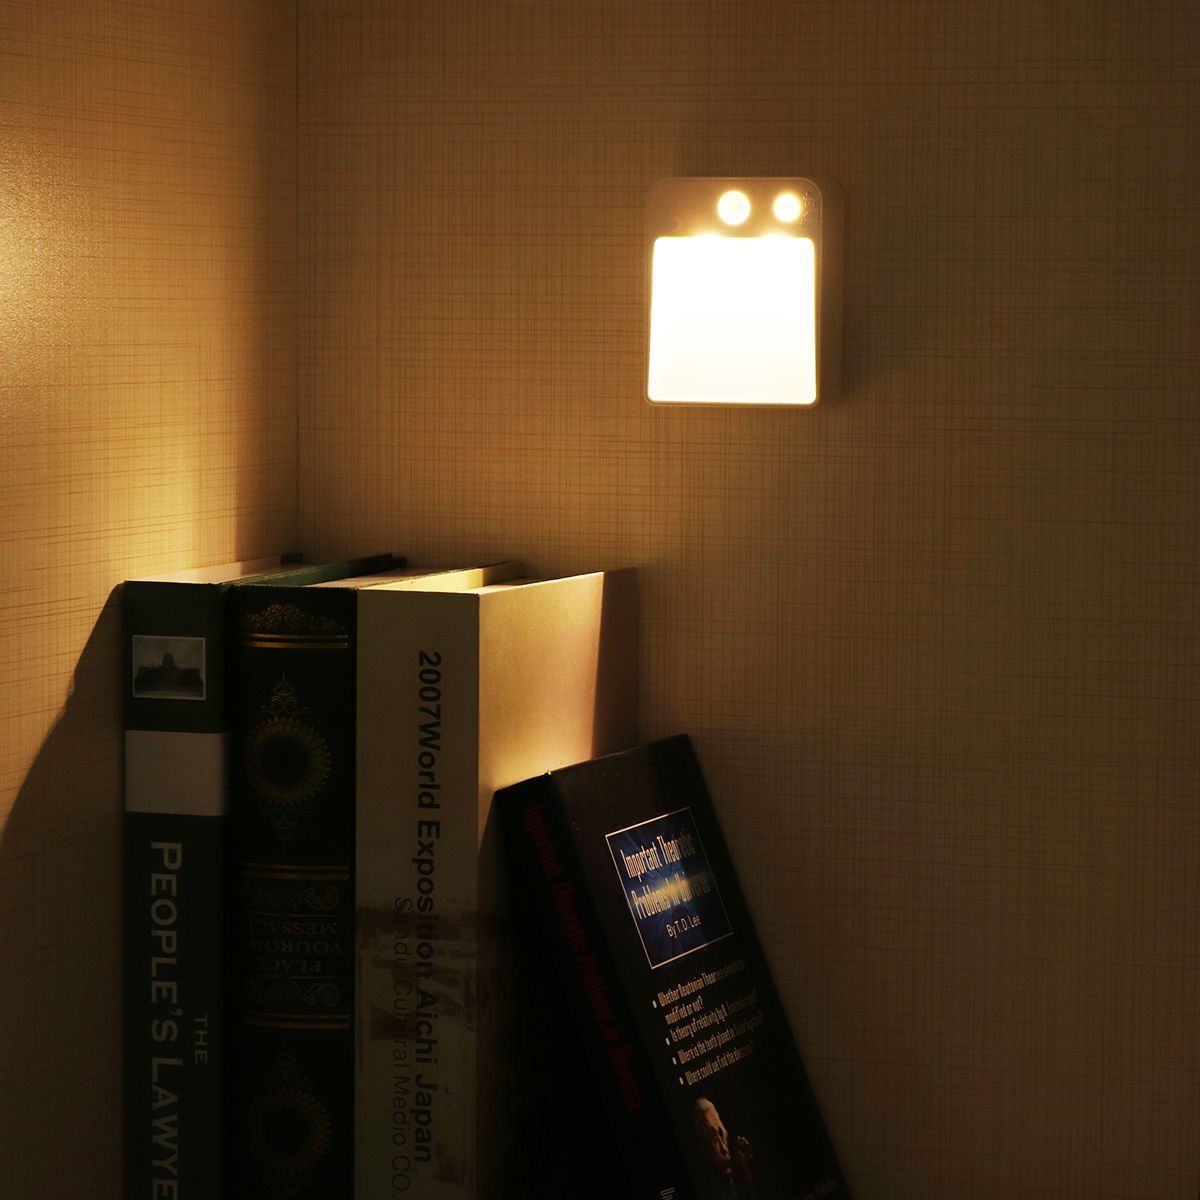 LED-Motion-Sensor-Night-Light-Automatic-Turn-On---Off-Human-Movement-Sense-Lamp-1697179